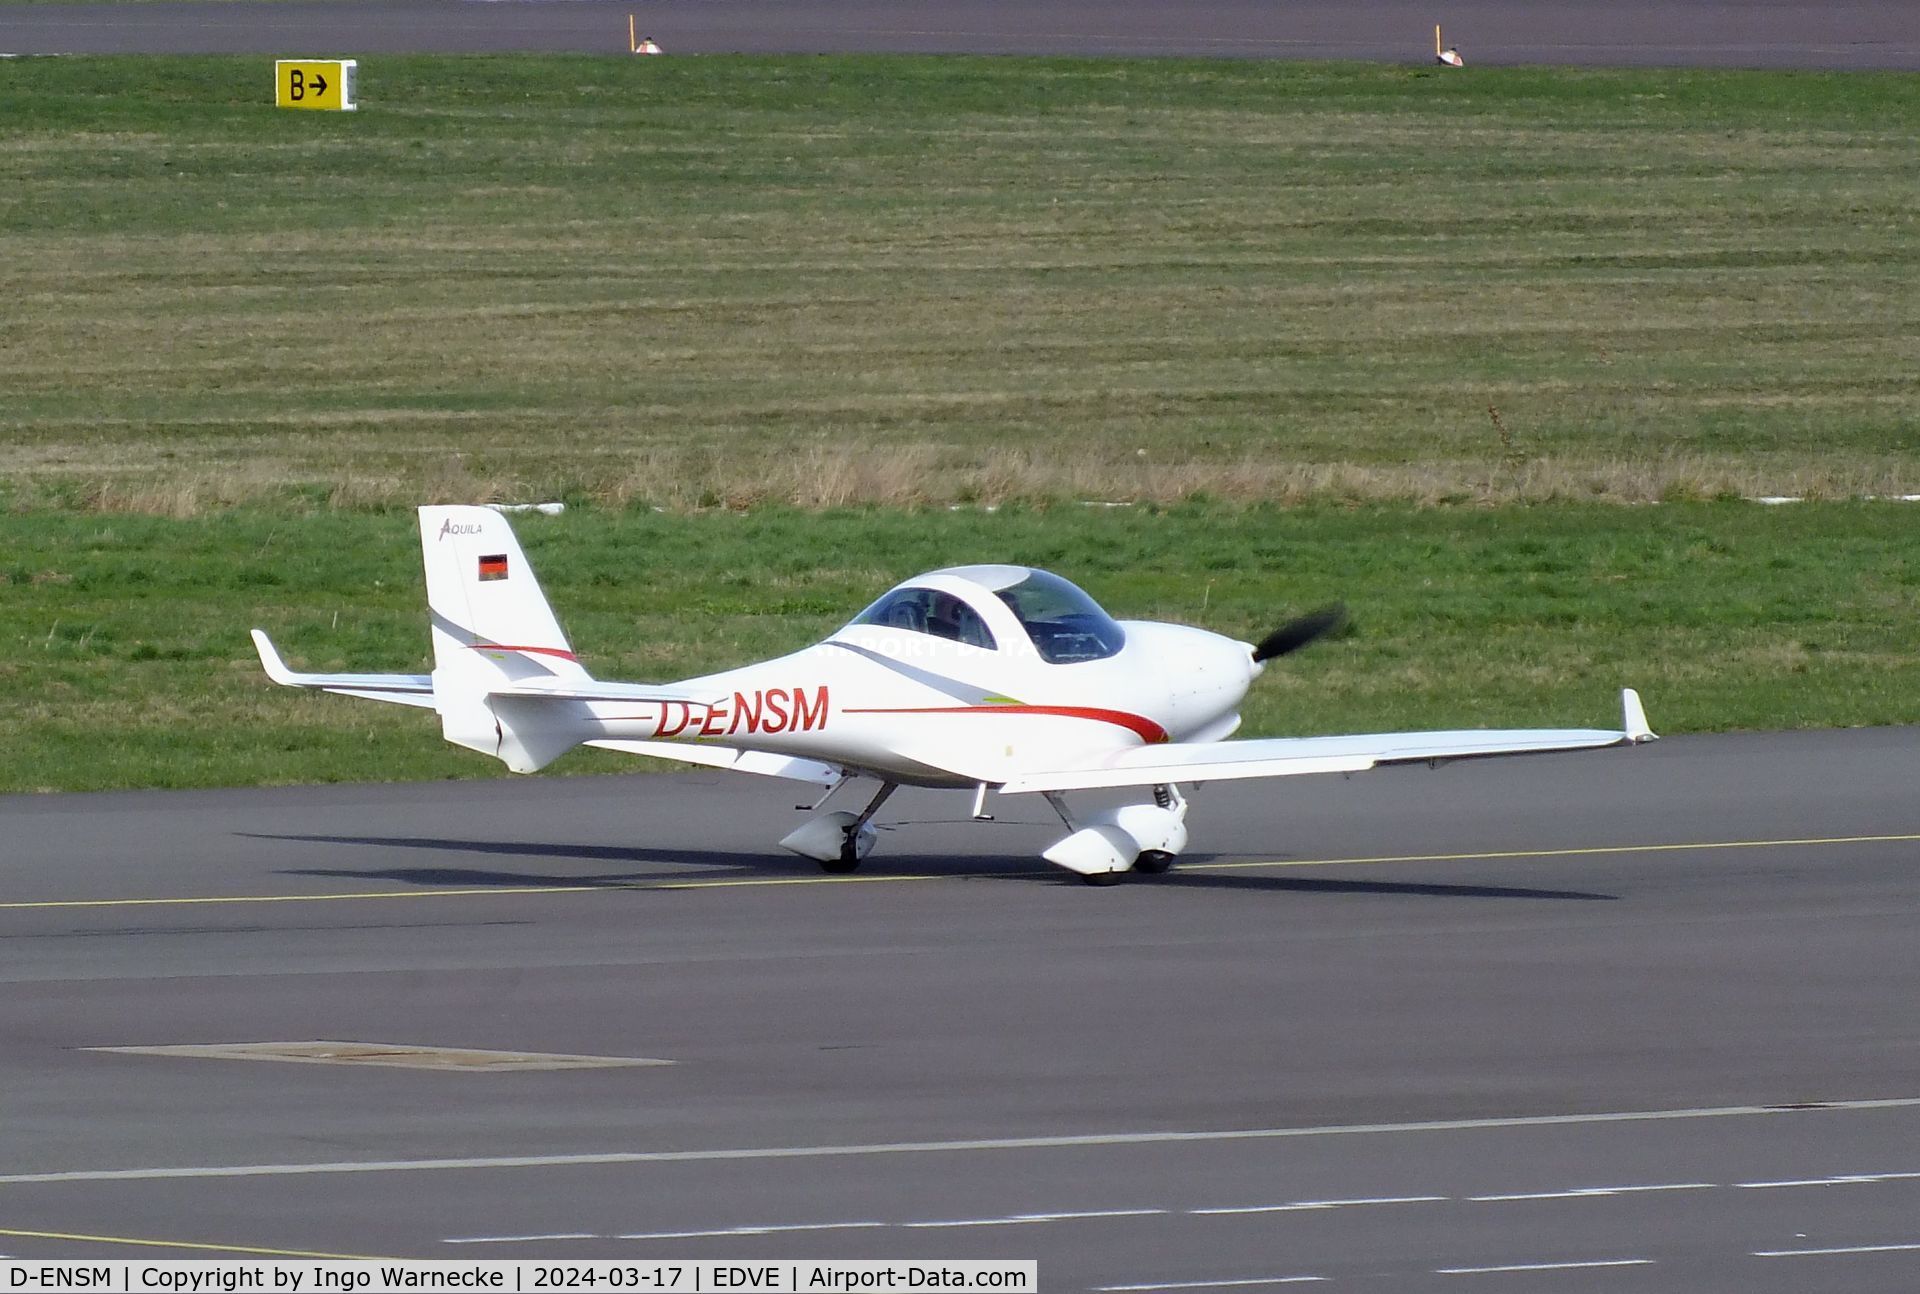 D-ENSM, Aquila A210 (AT01) C/N AT01-129, Aquila A210 (AT01) at Braunschweig/Wolfsburg airport, Waggum